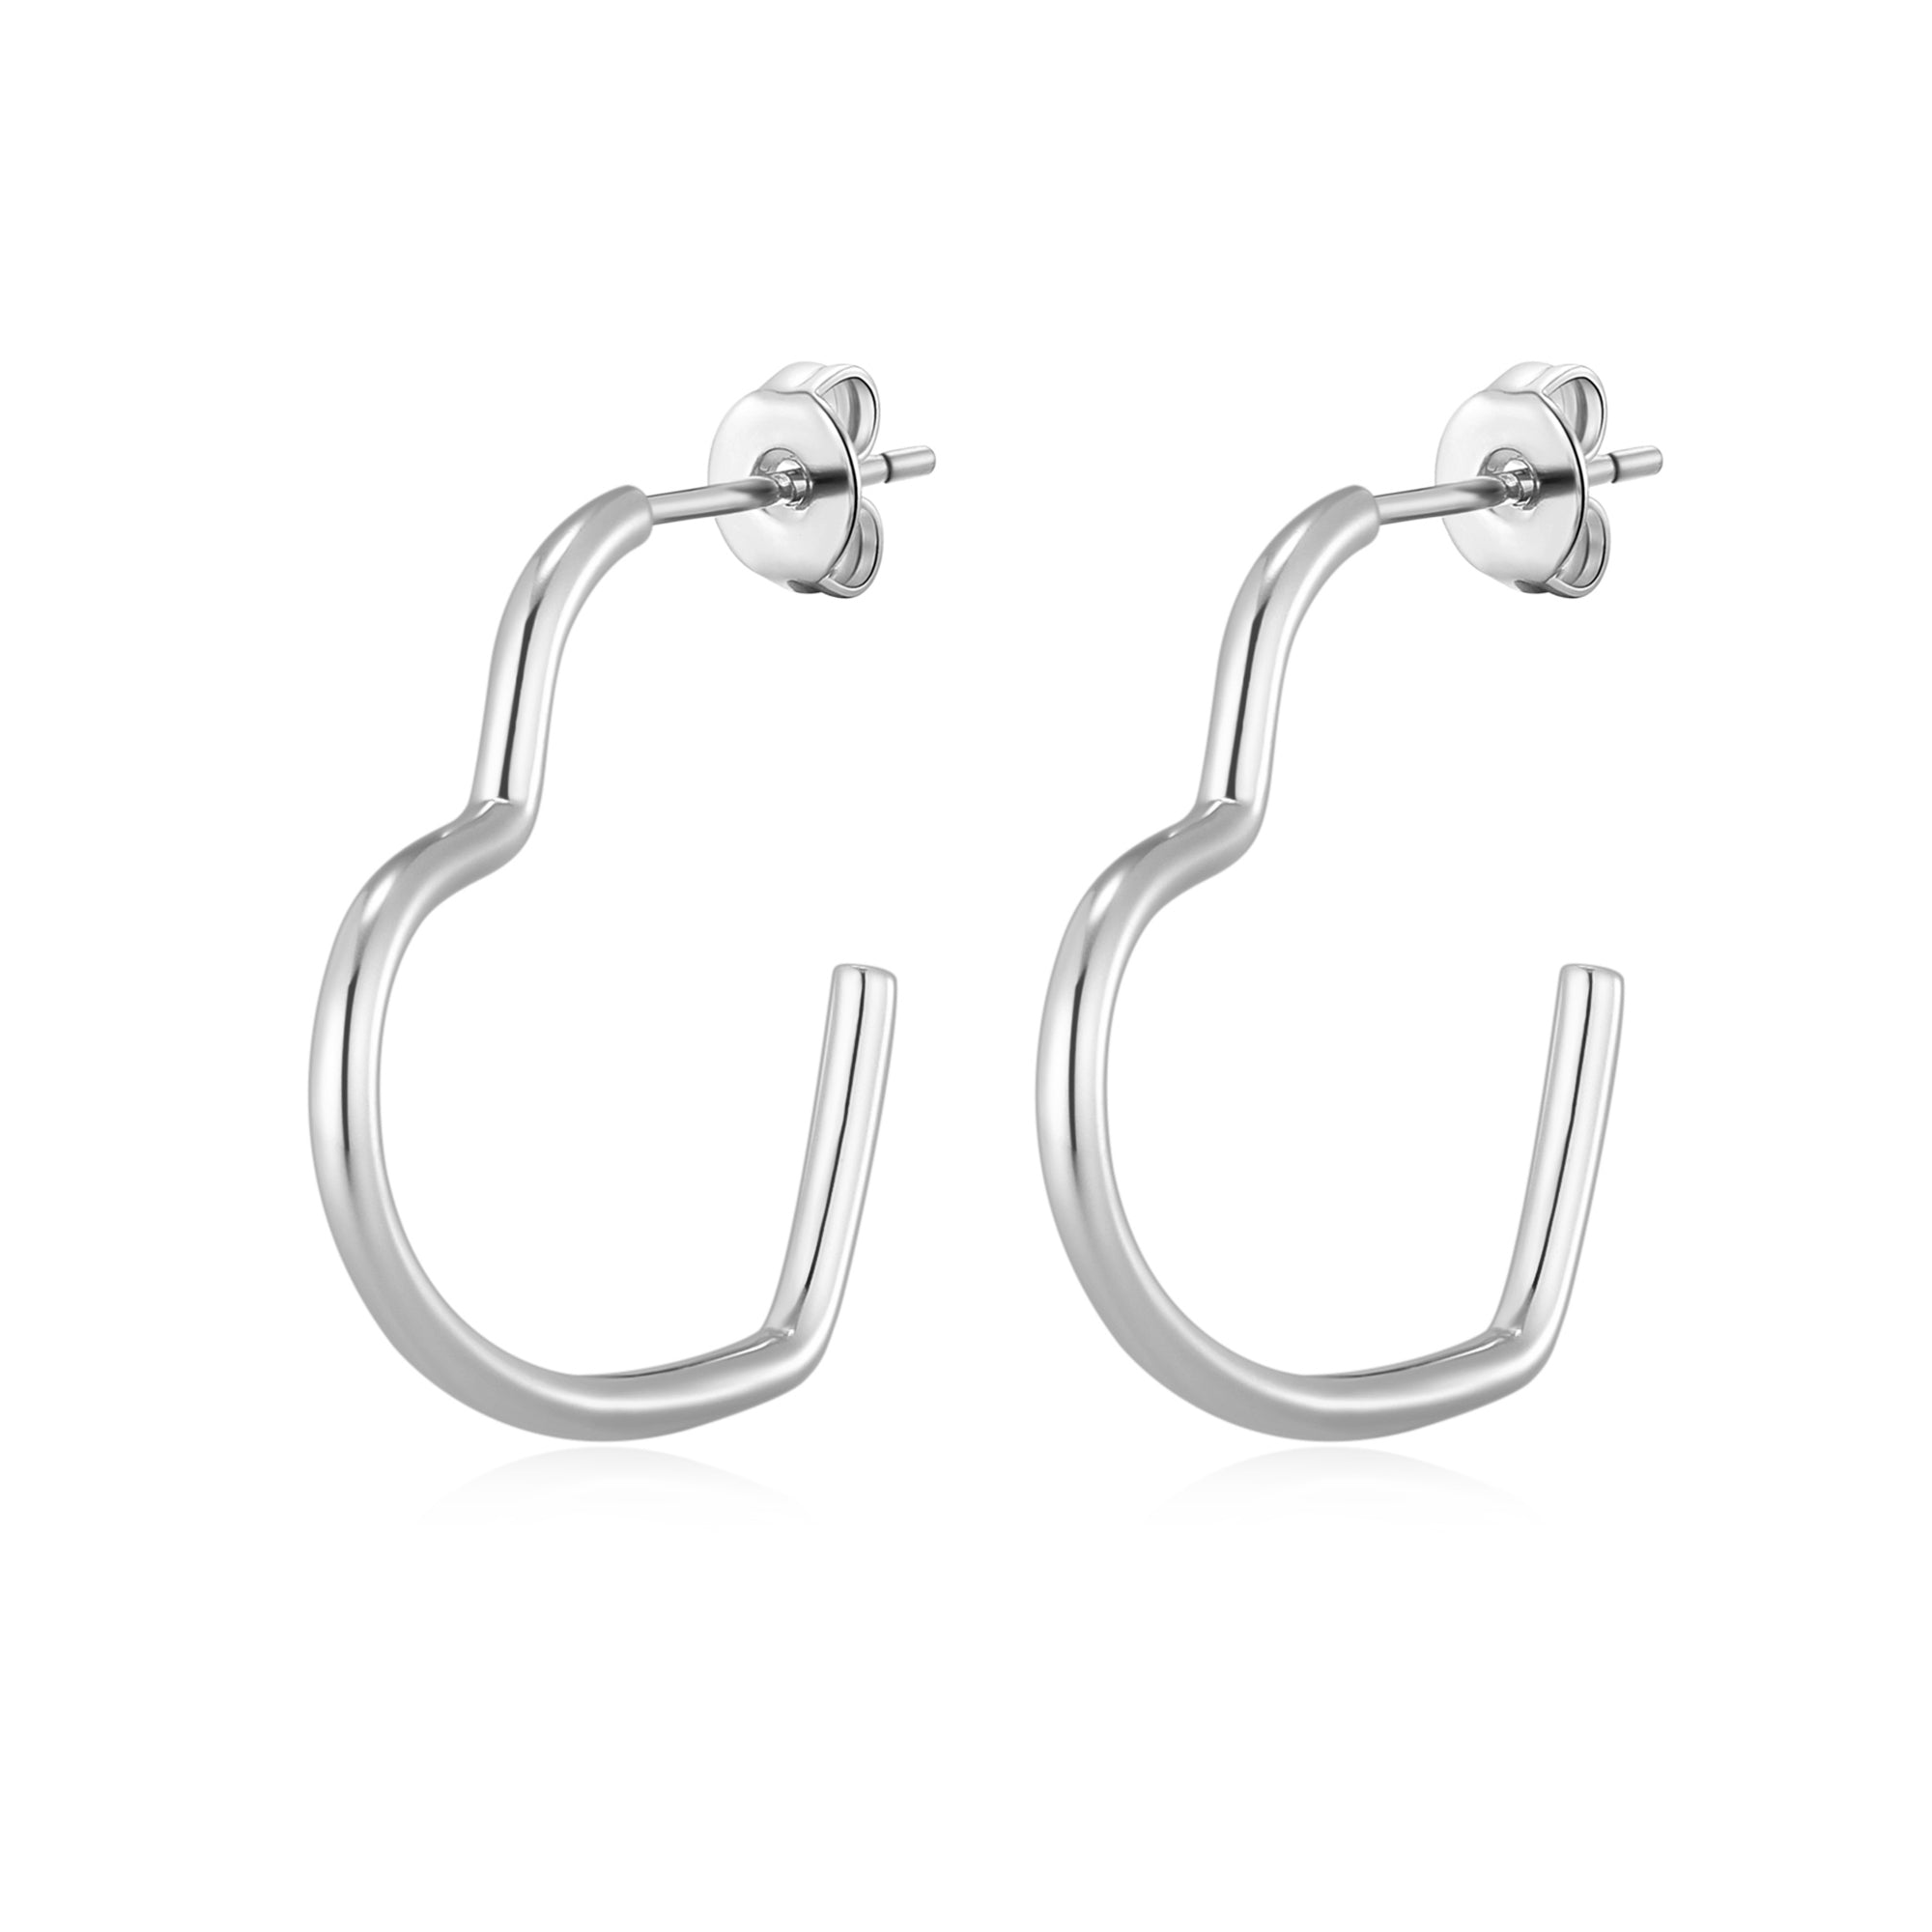 Silver Plated Heart Hoop Earrings by Philip Jones Jewellery